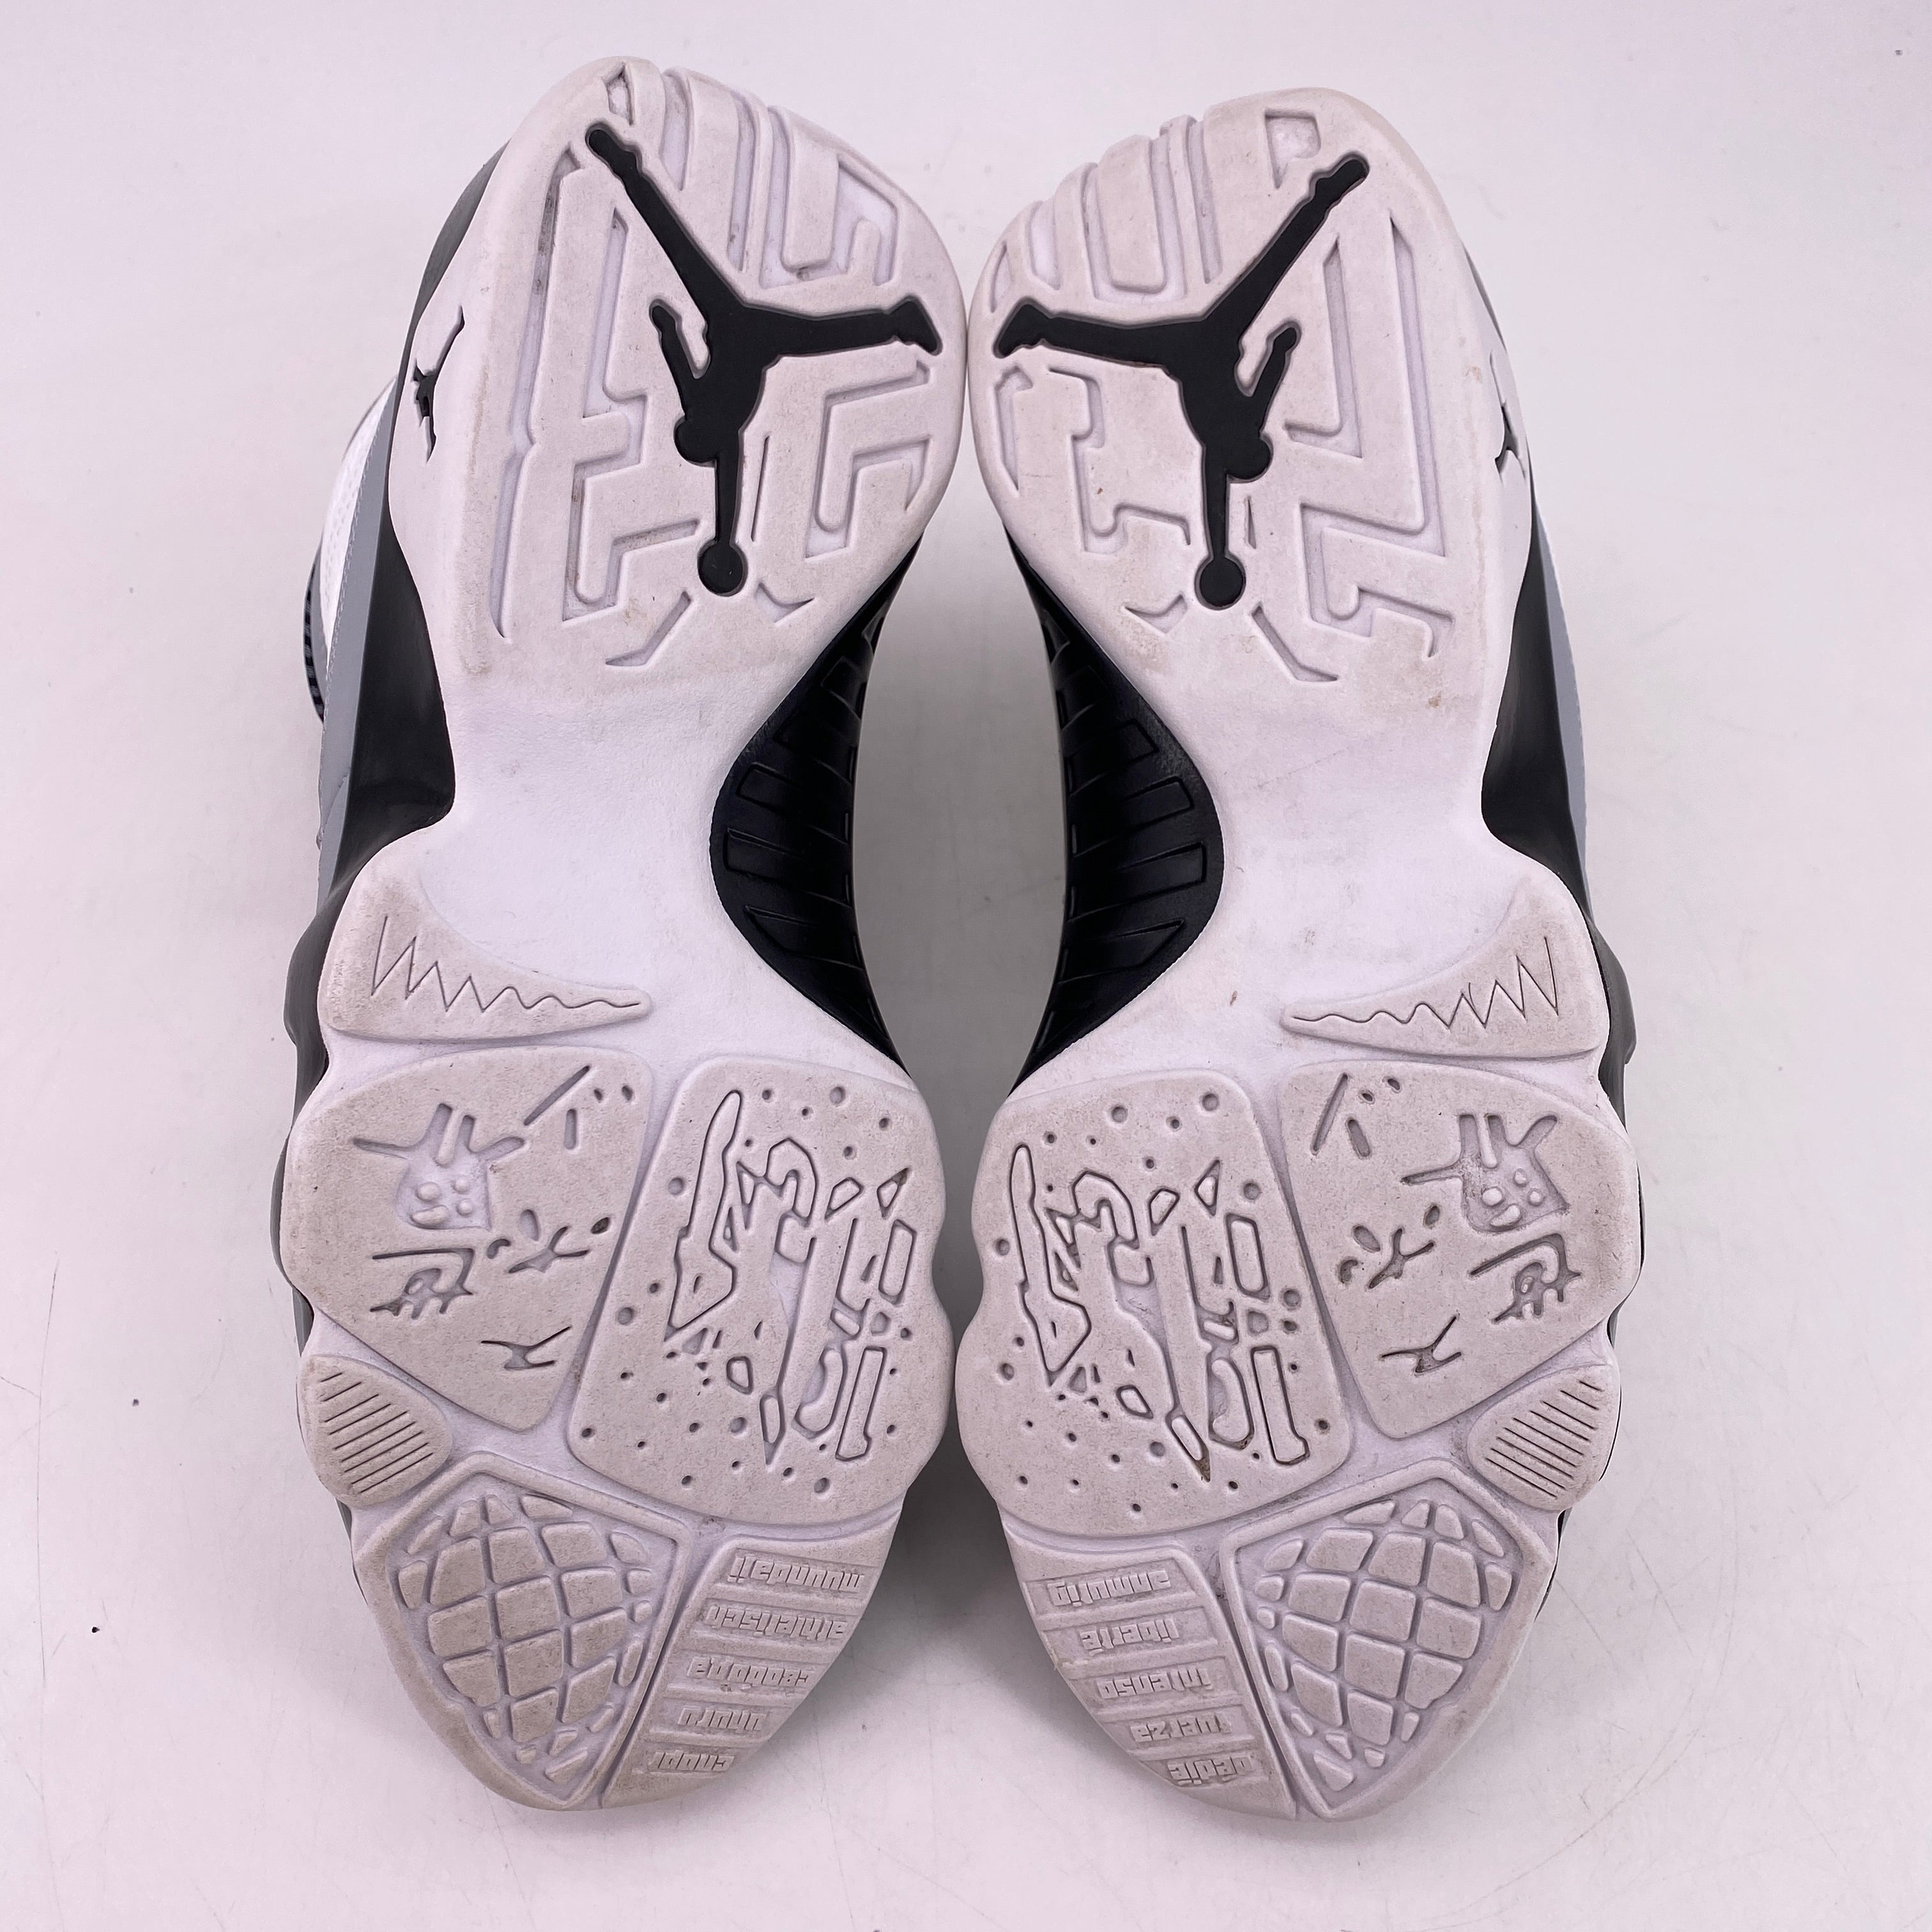 Air Jordan 9 Retro &quot;Barons&quot; 2014 Used Size 8.5